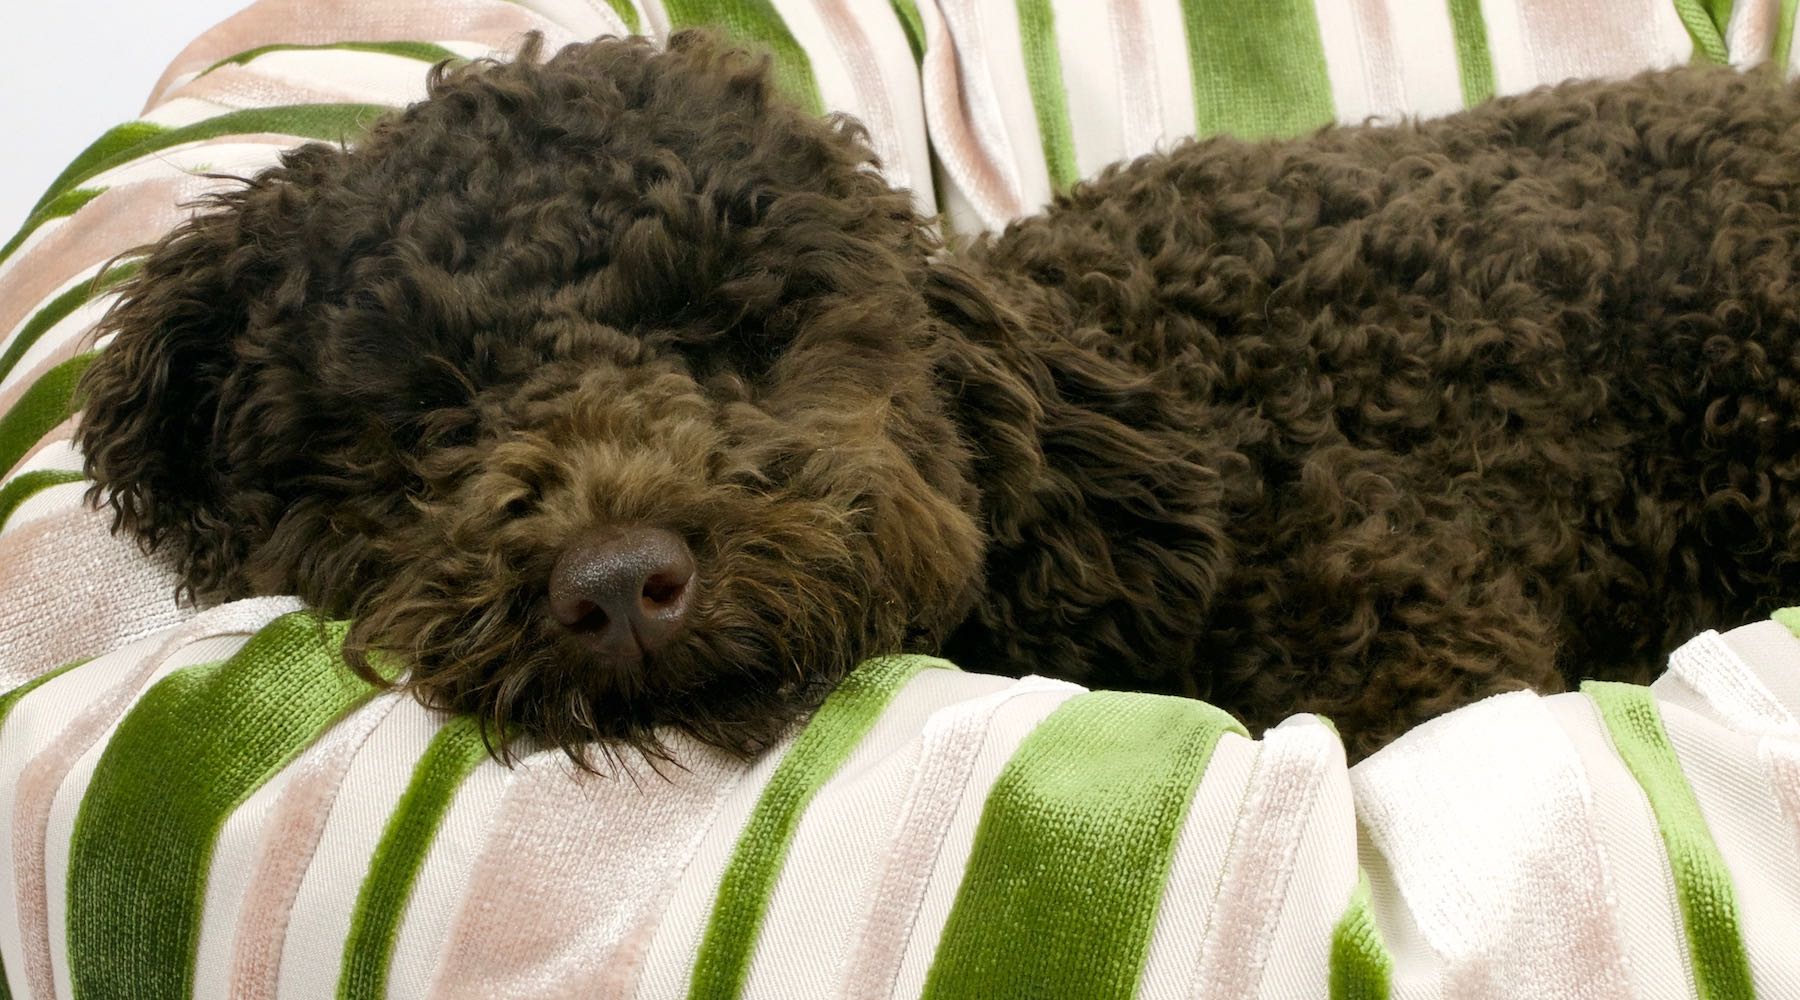 Cute brown poodle dog sleeping in green comfy velvet dog bed.